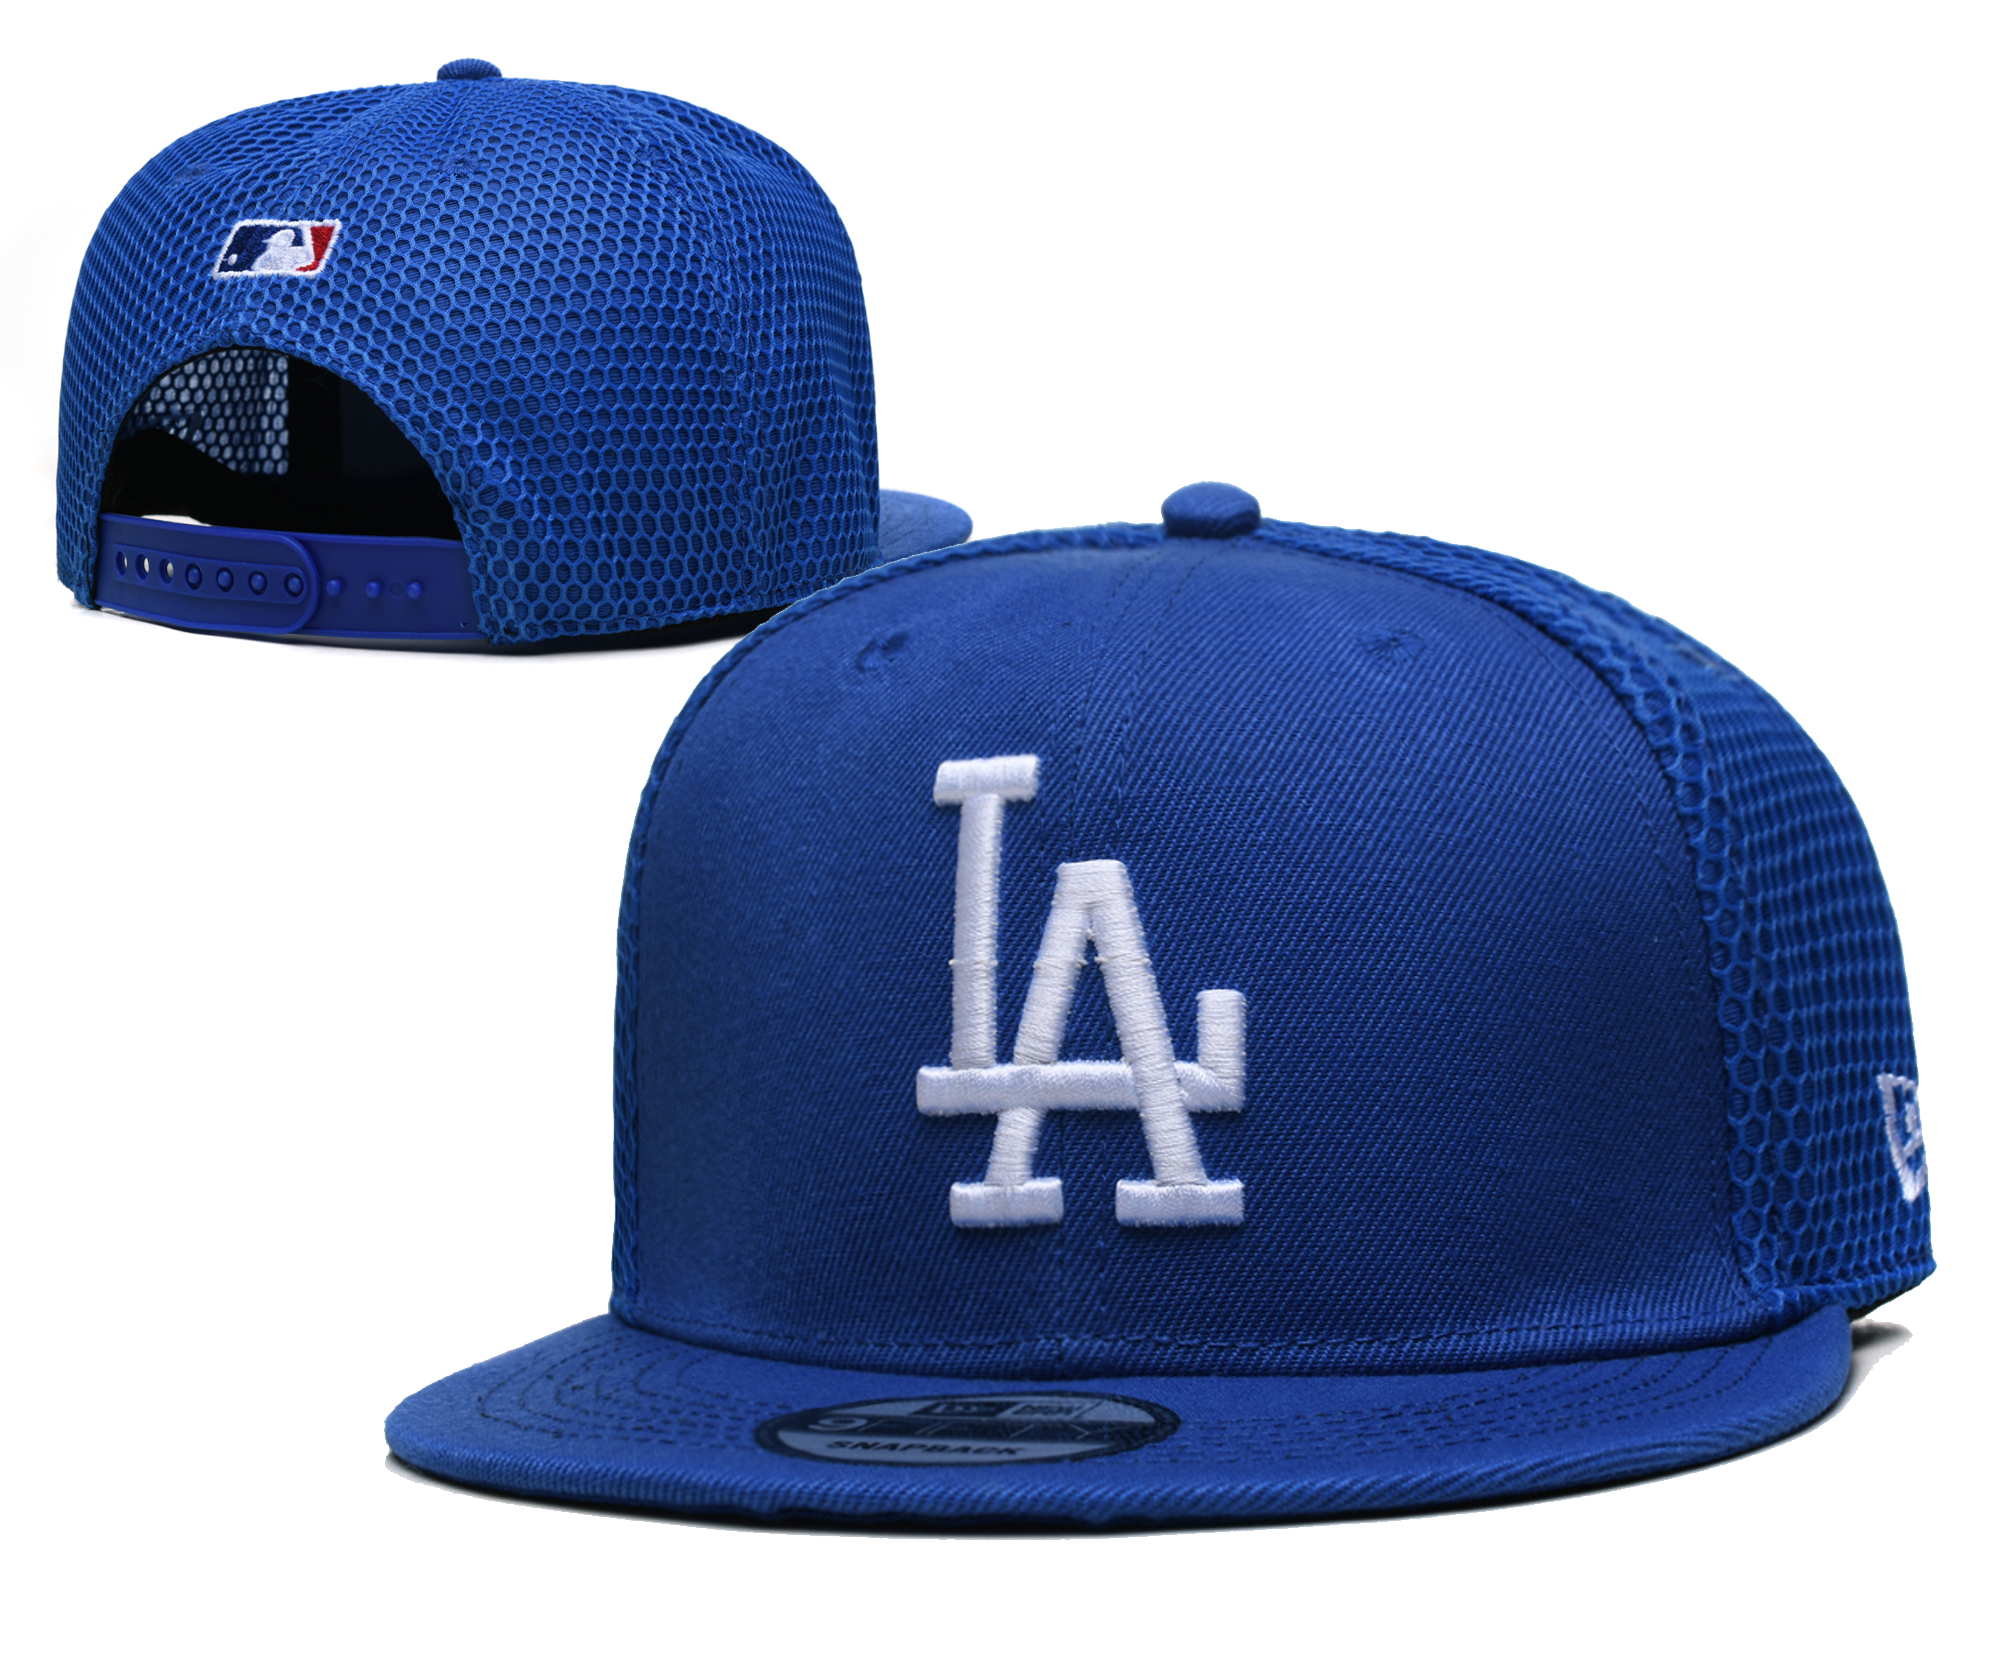 Cheap 2021 MLB Los Angeles Dodgers 30 TX hat